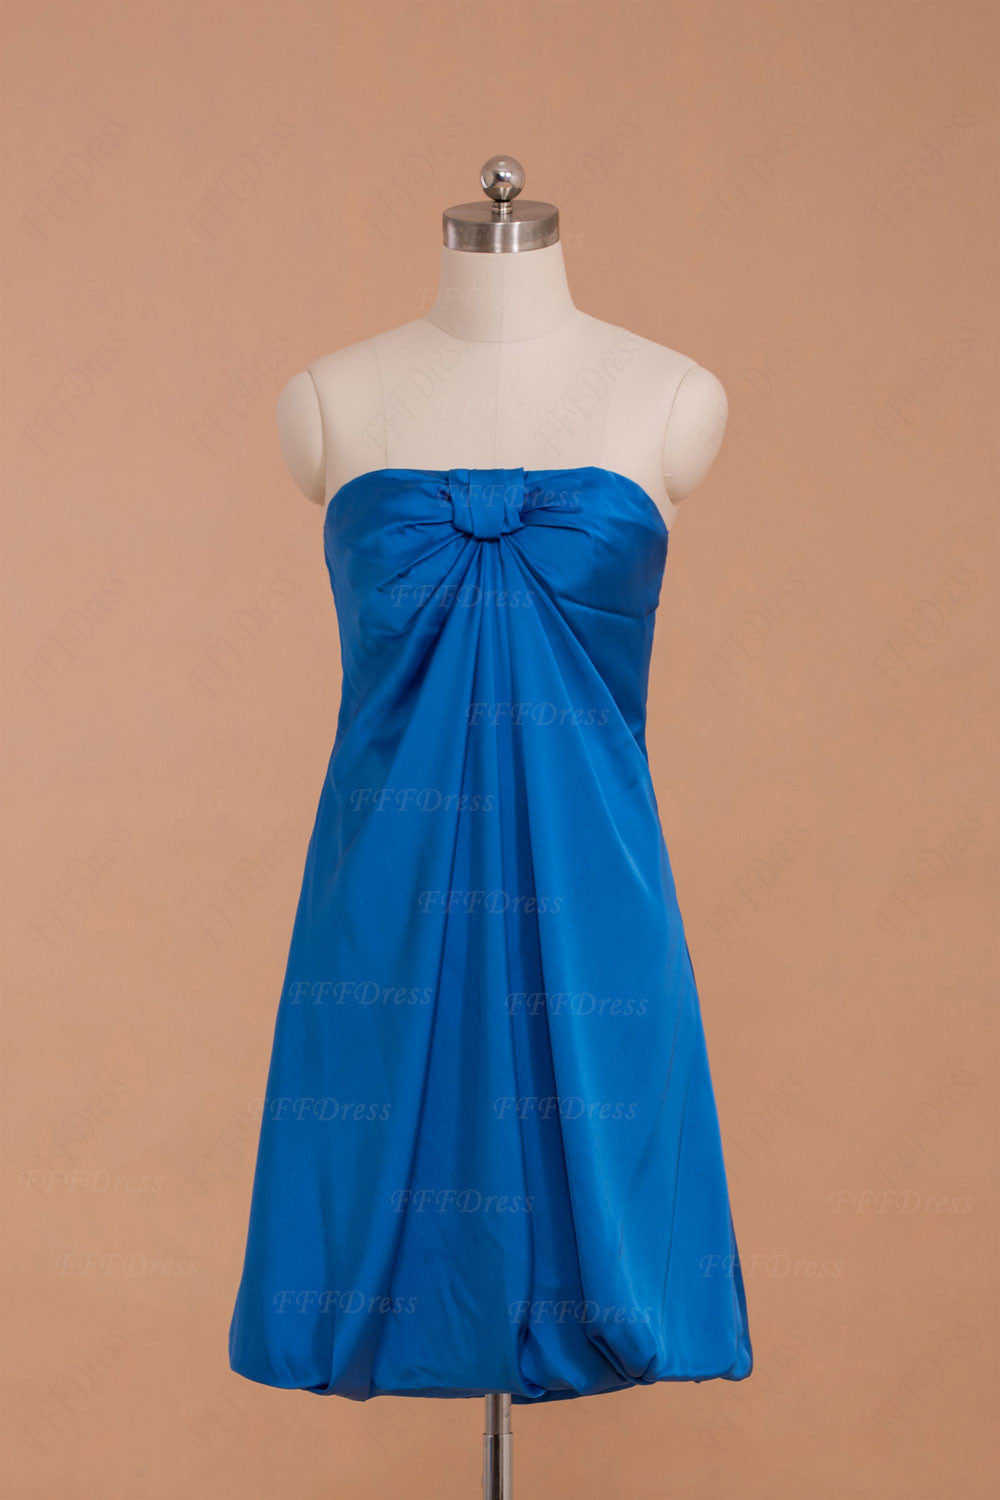 Strapless royal blue short homecoming dresses